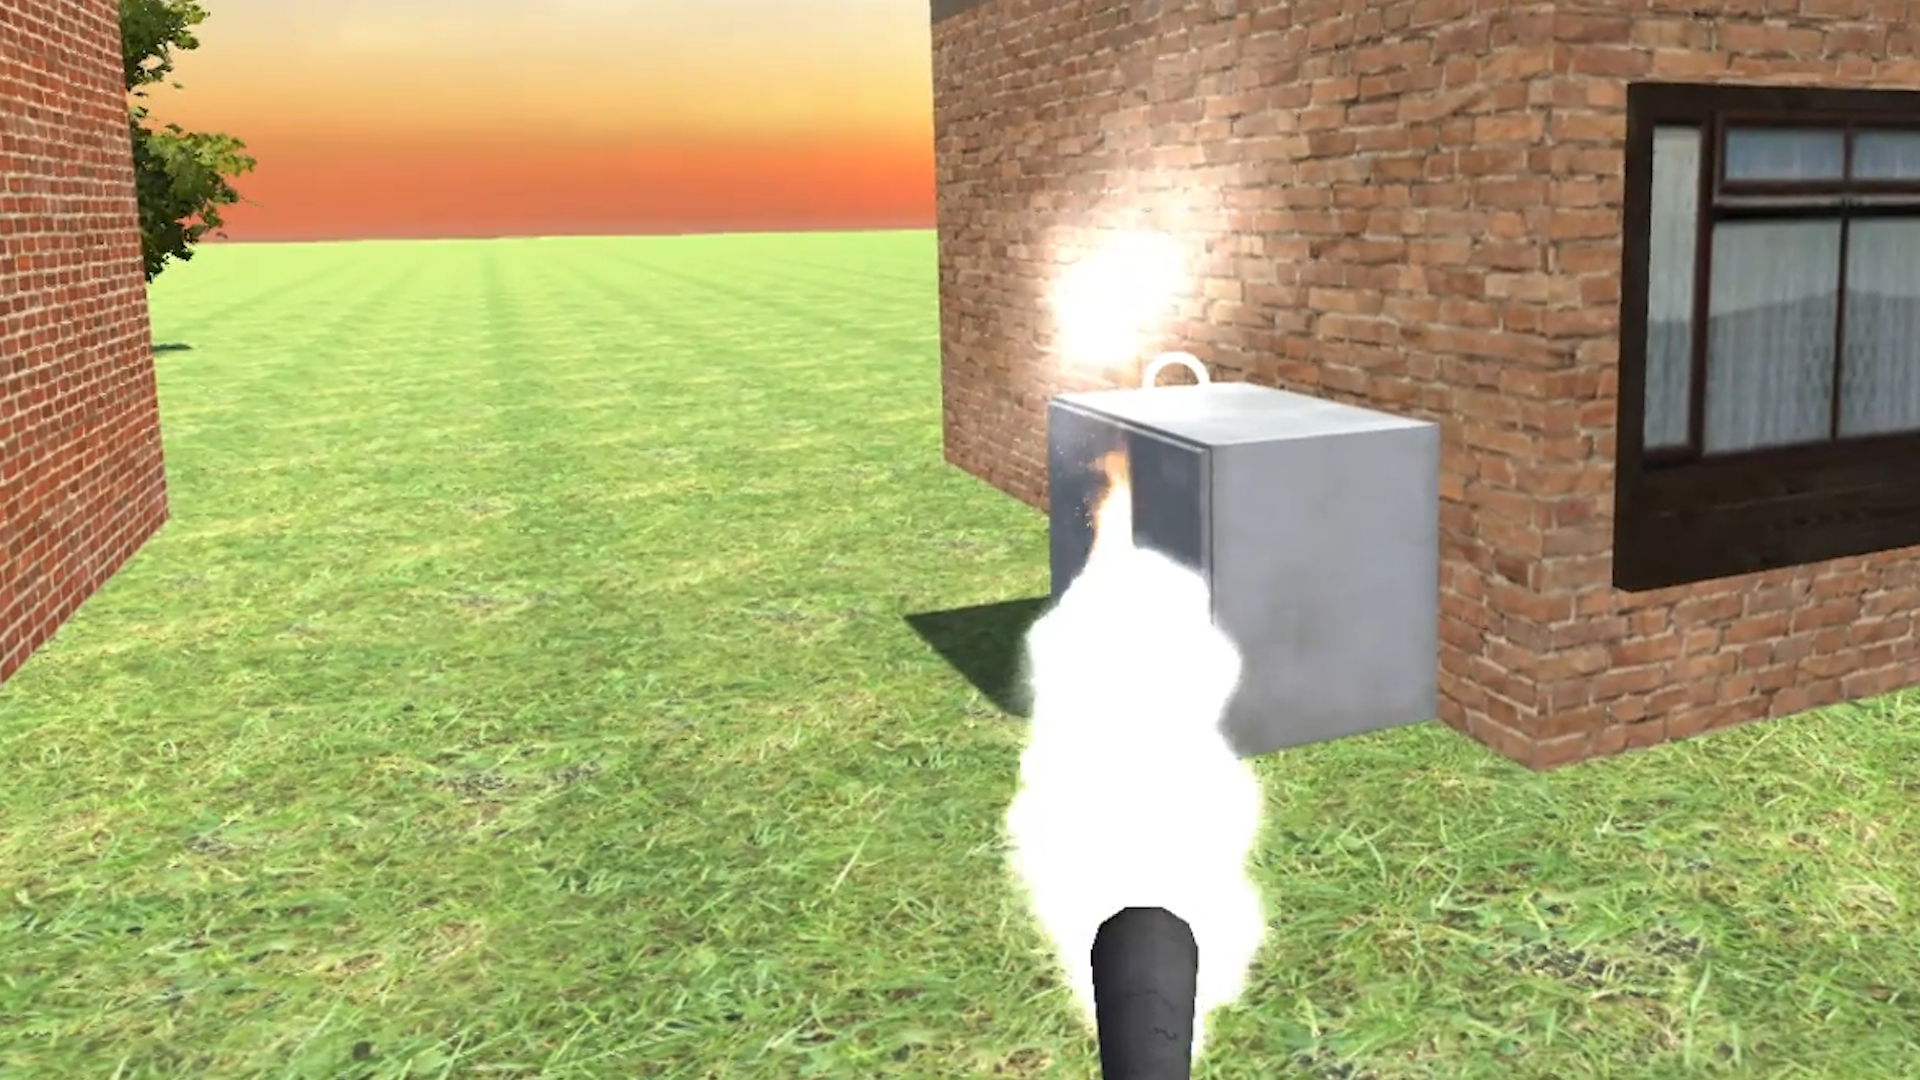 Example Virtual Reality Environment Image